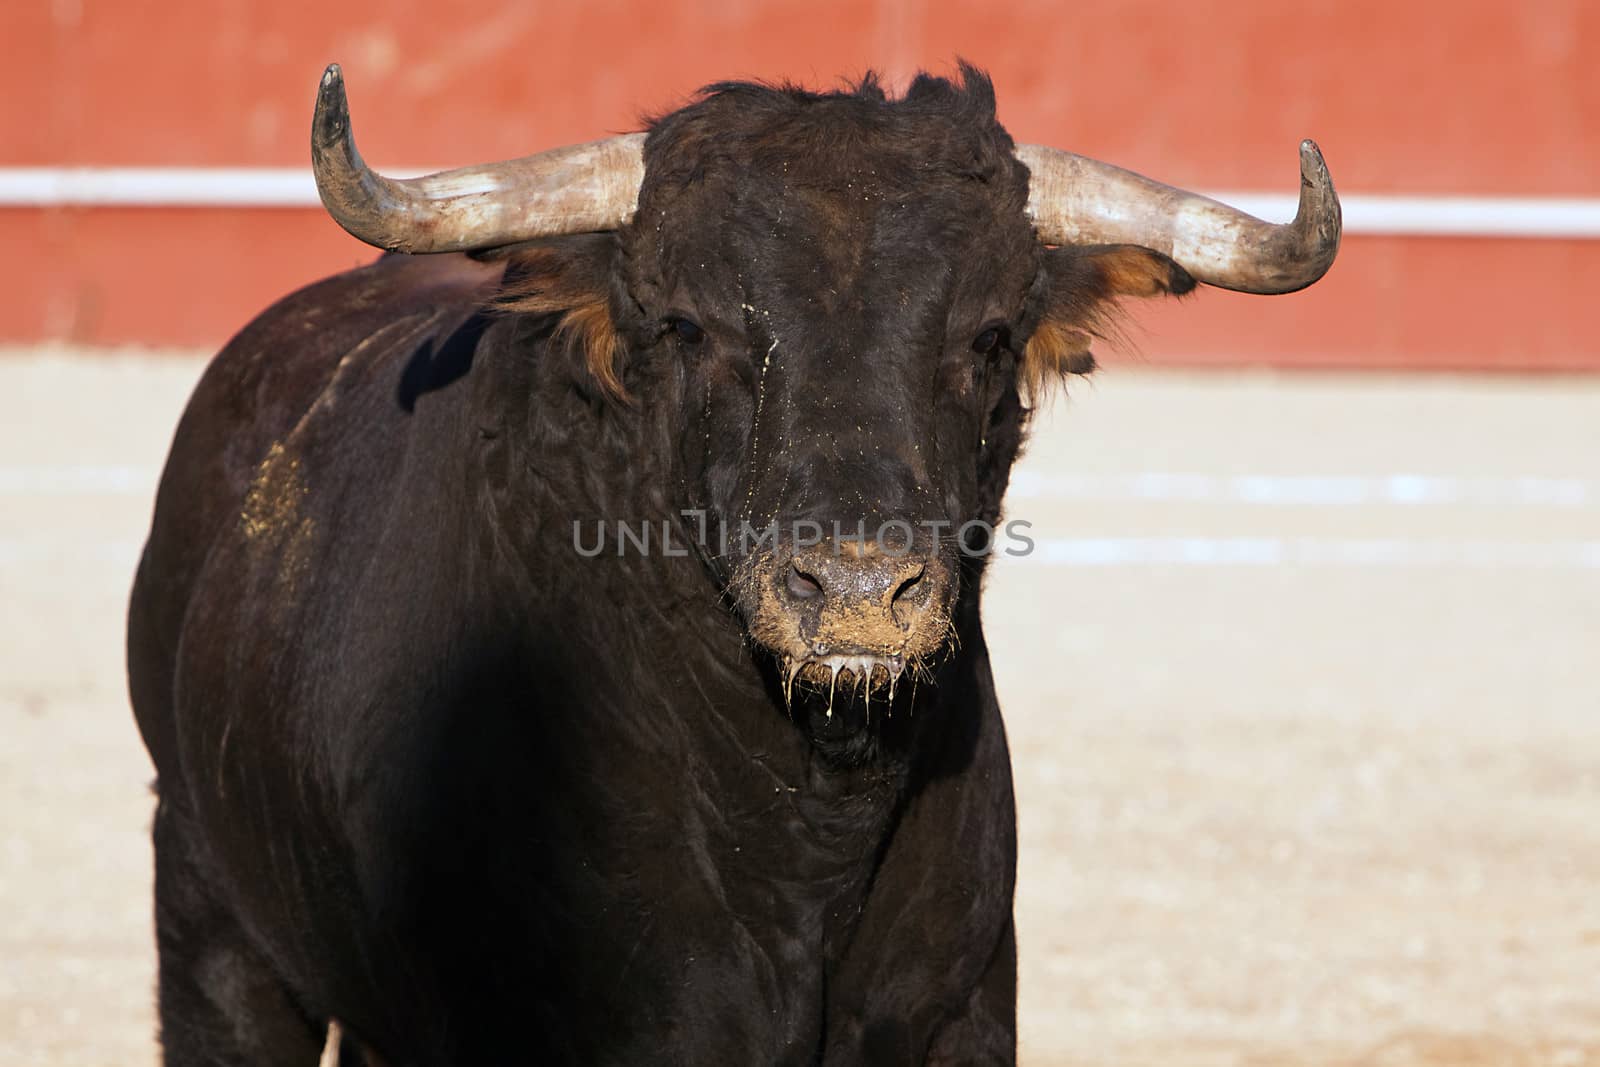 Fighting bull picture from Spain, Black bull